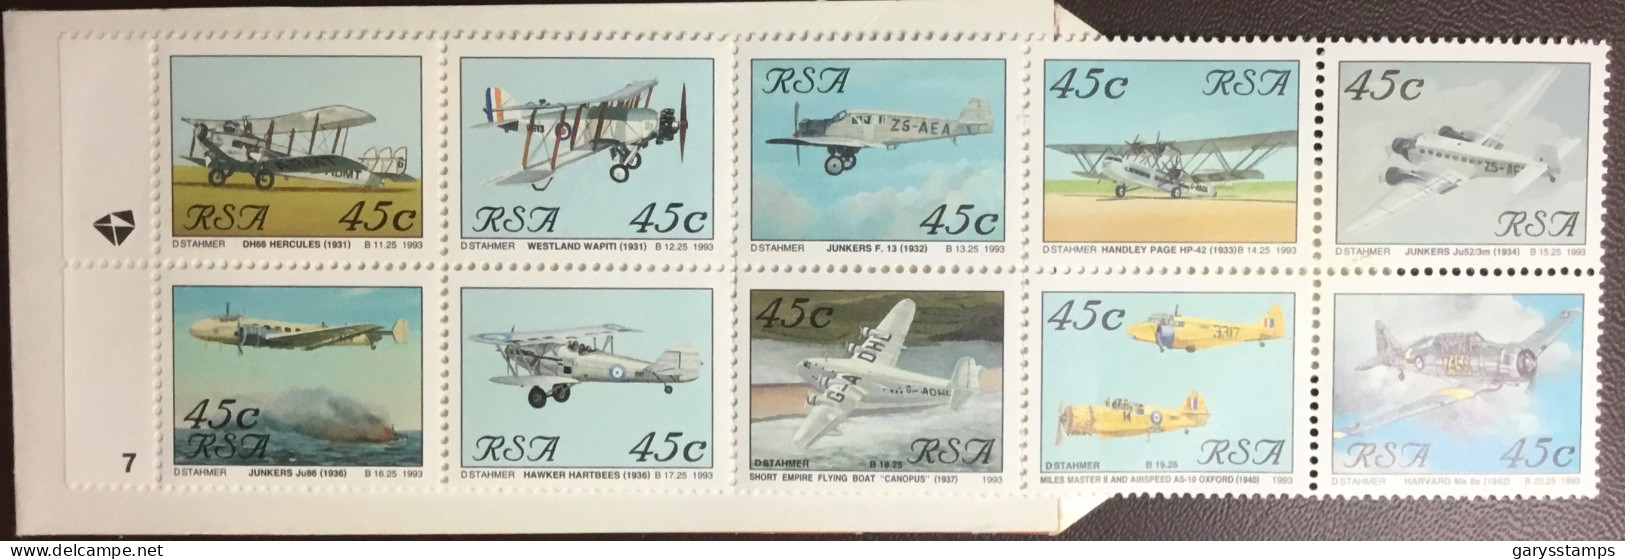 South Africa 1993 Aviation Booklet Pane 7 Booklet Unused - Postzegelboekjes